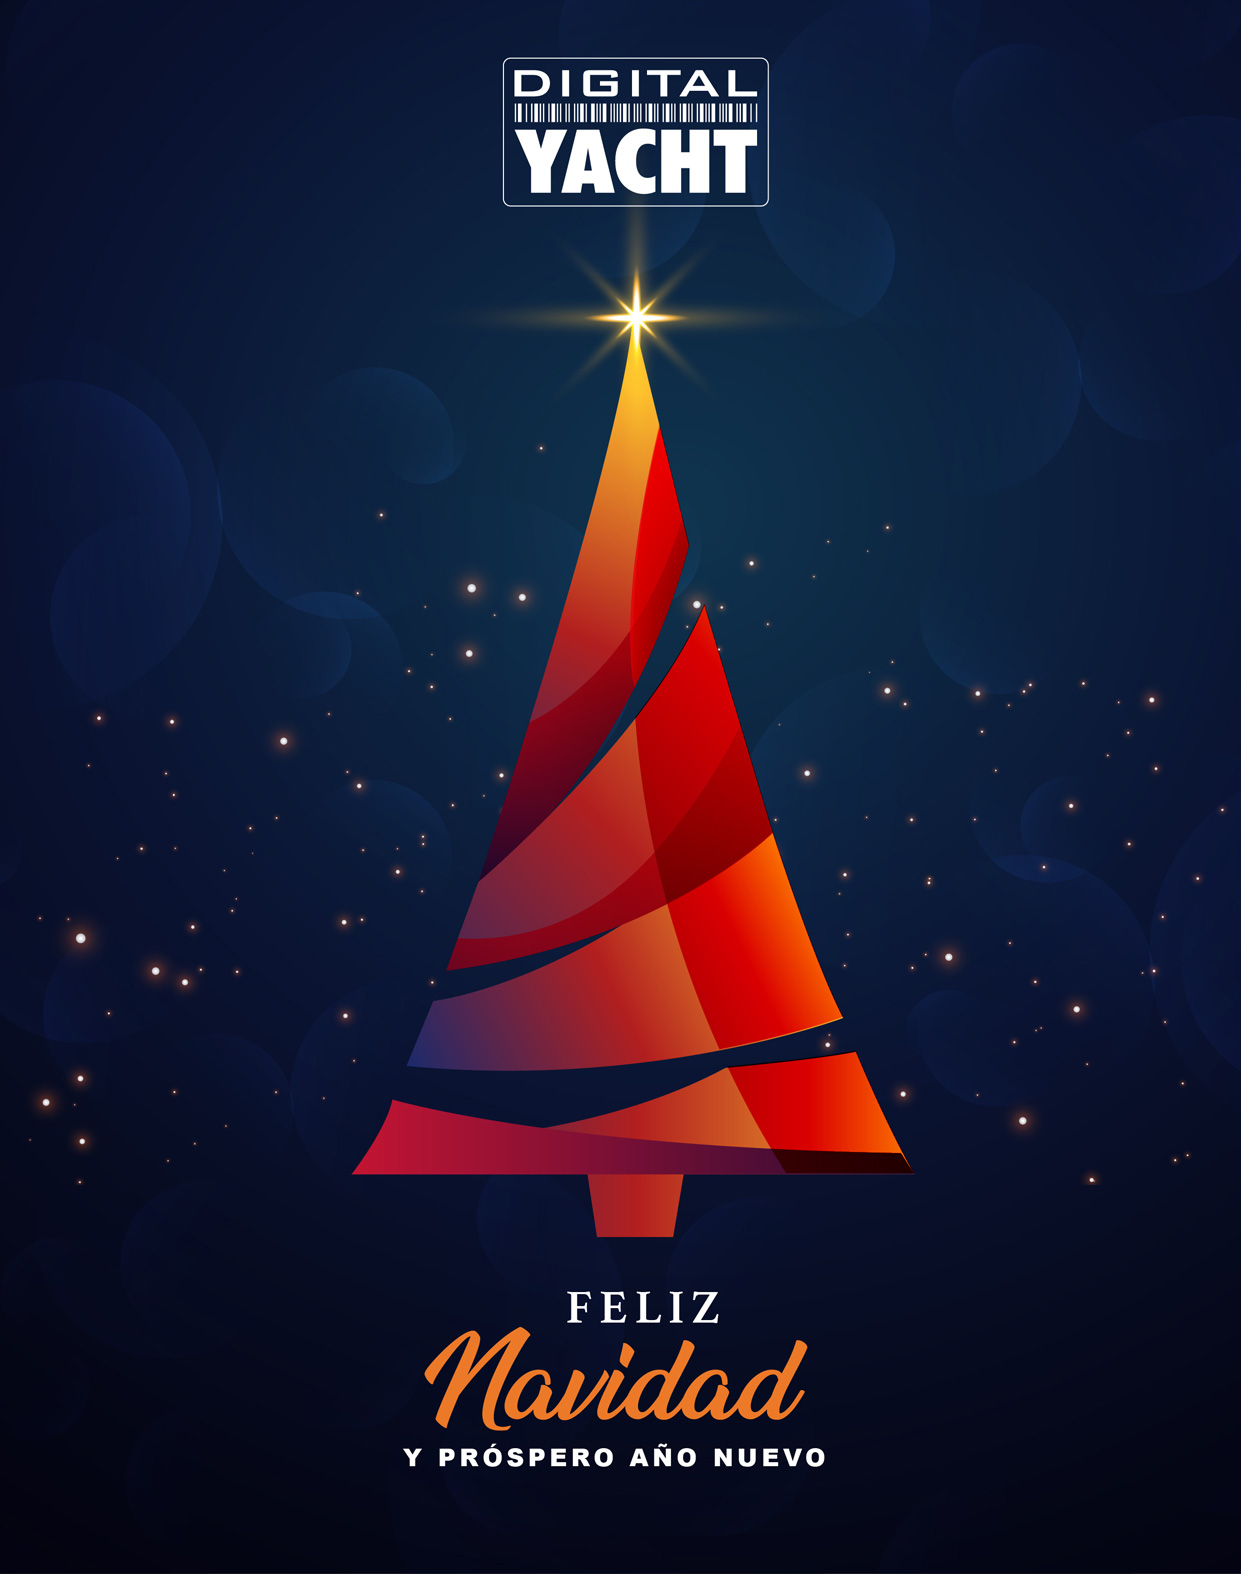 Digital Yacht les desea una Feliz Navidad - Digital Yacht Spanish Blog